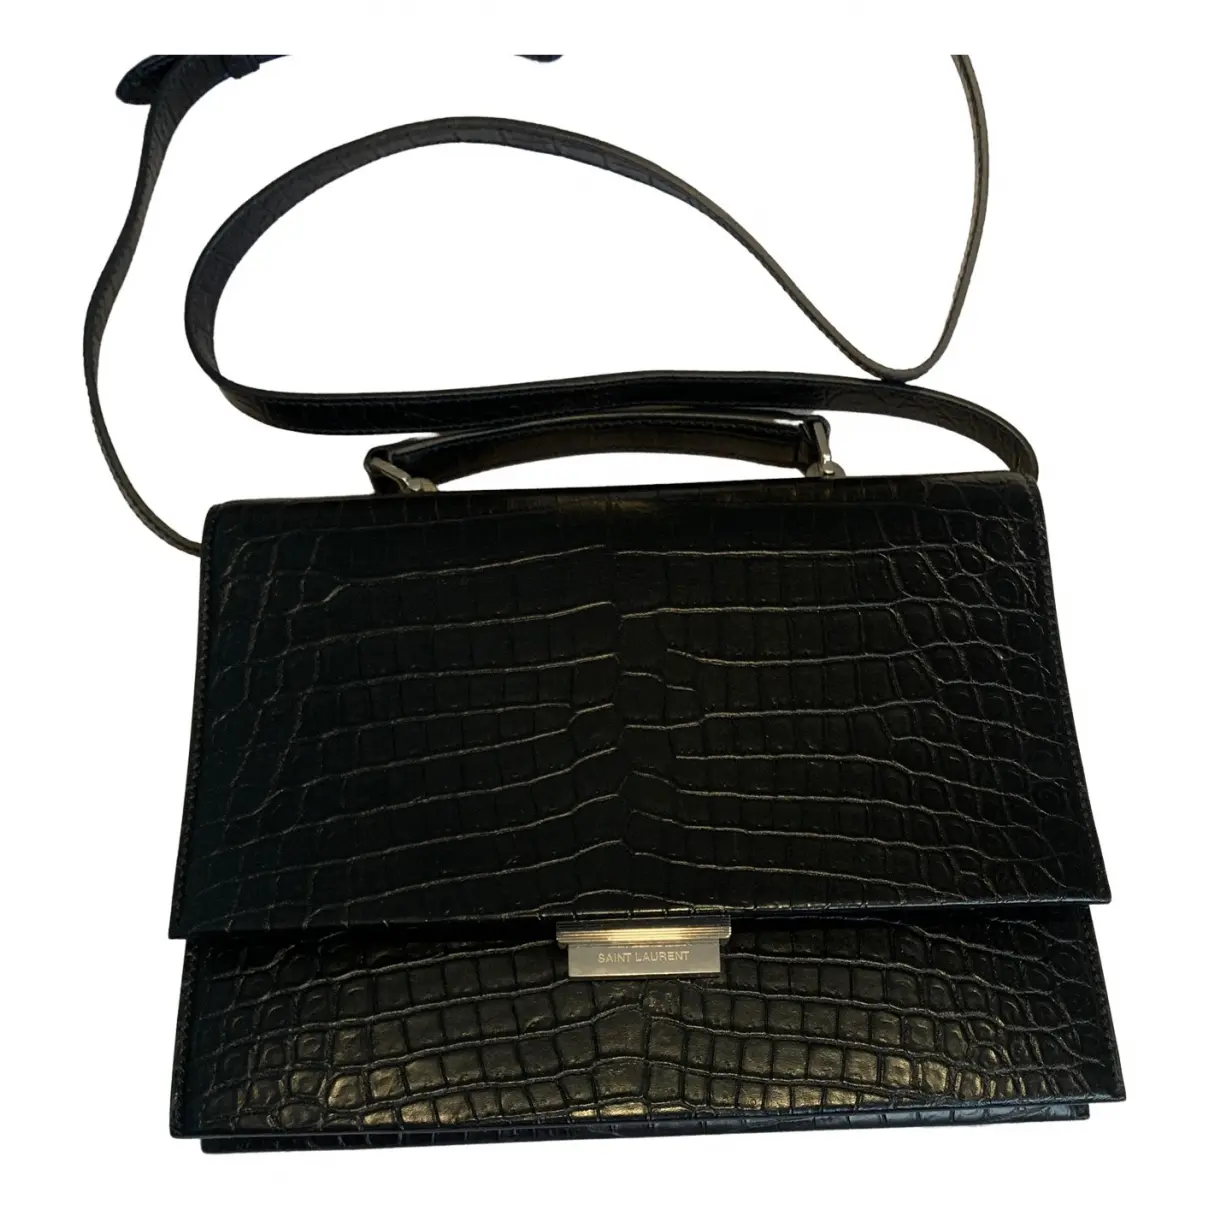 Babylone leather handbag Saint Laurent